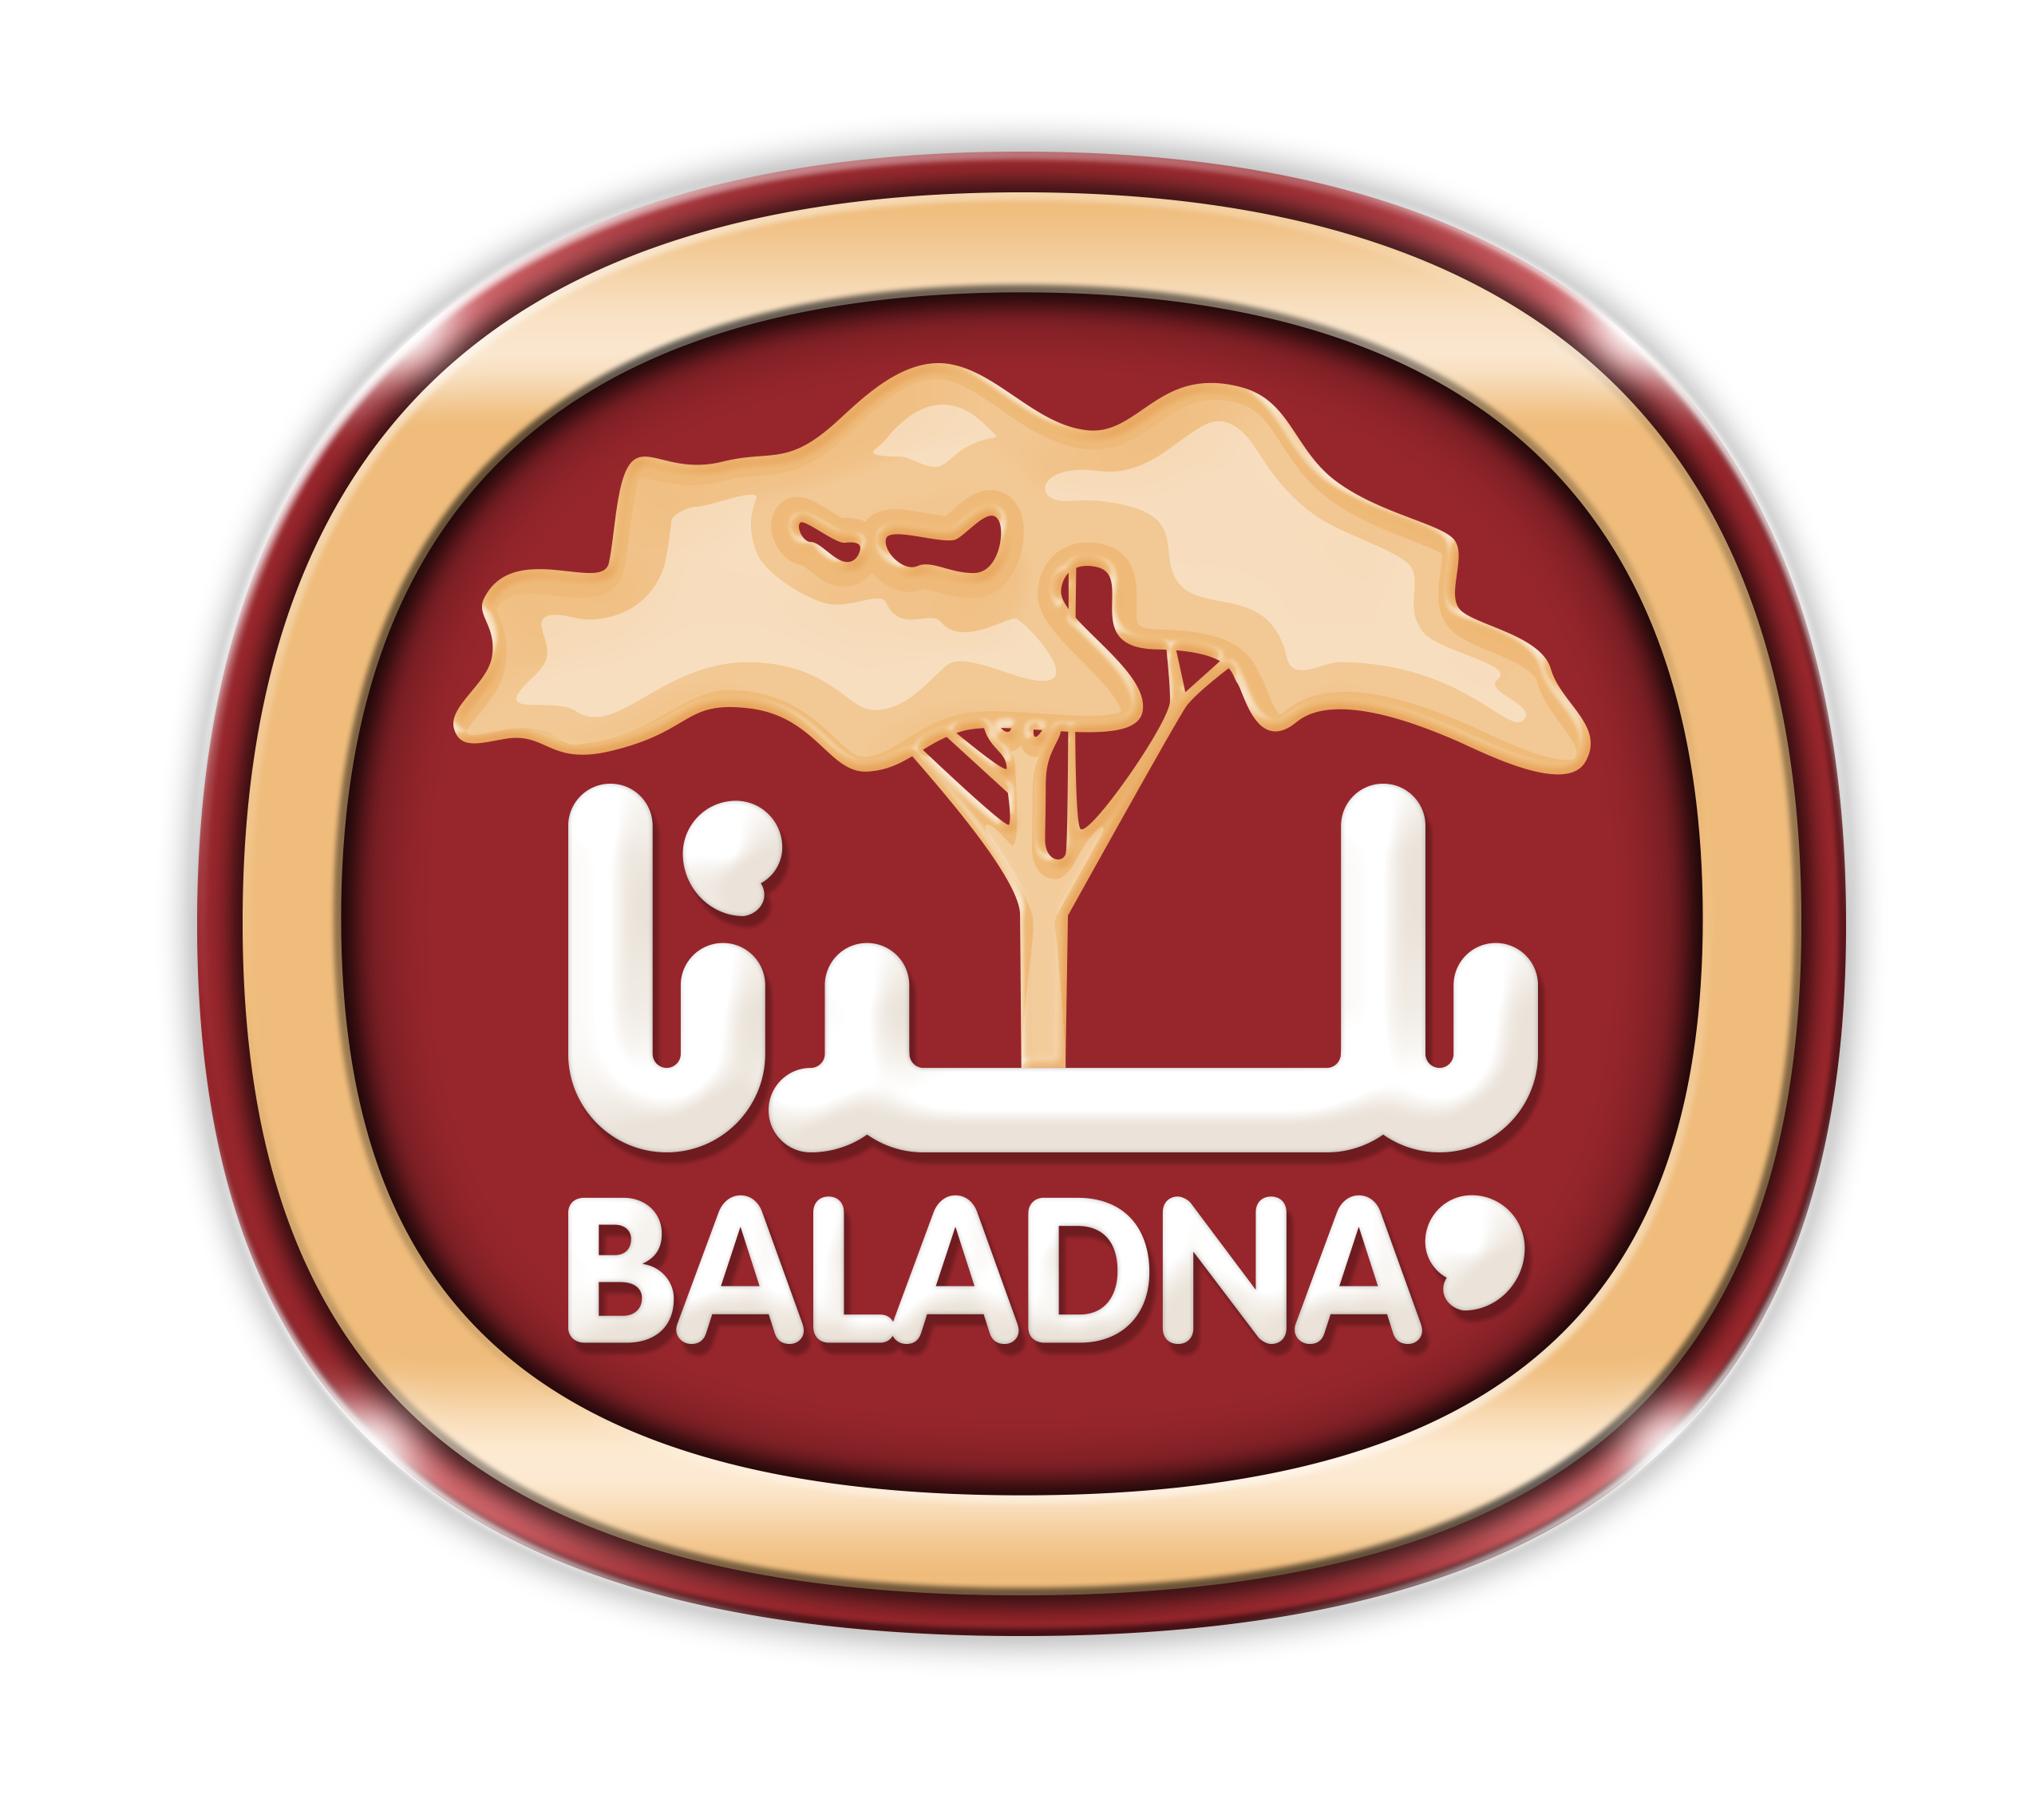 Baladna